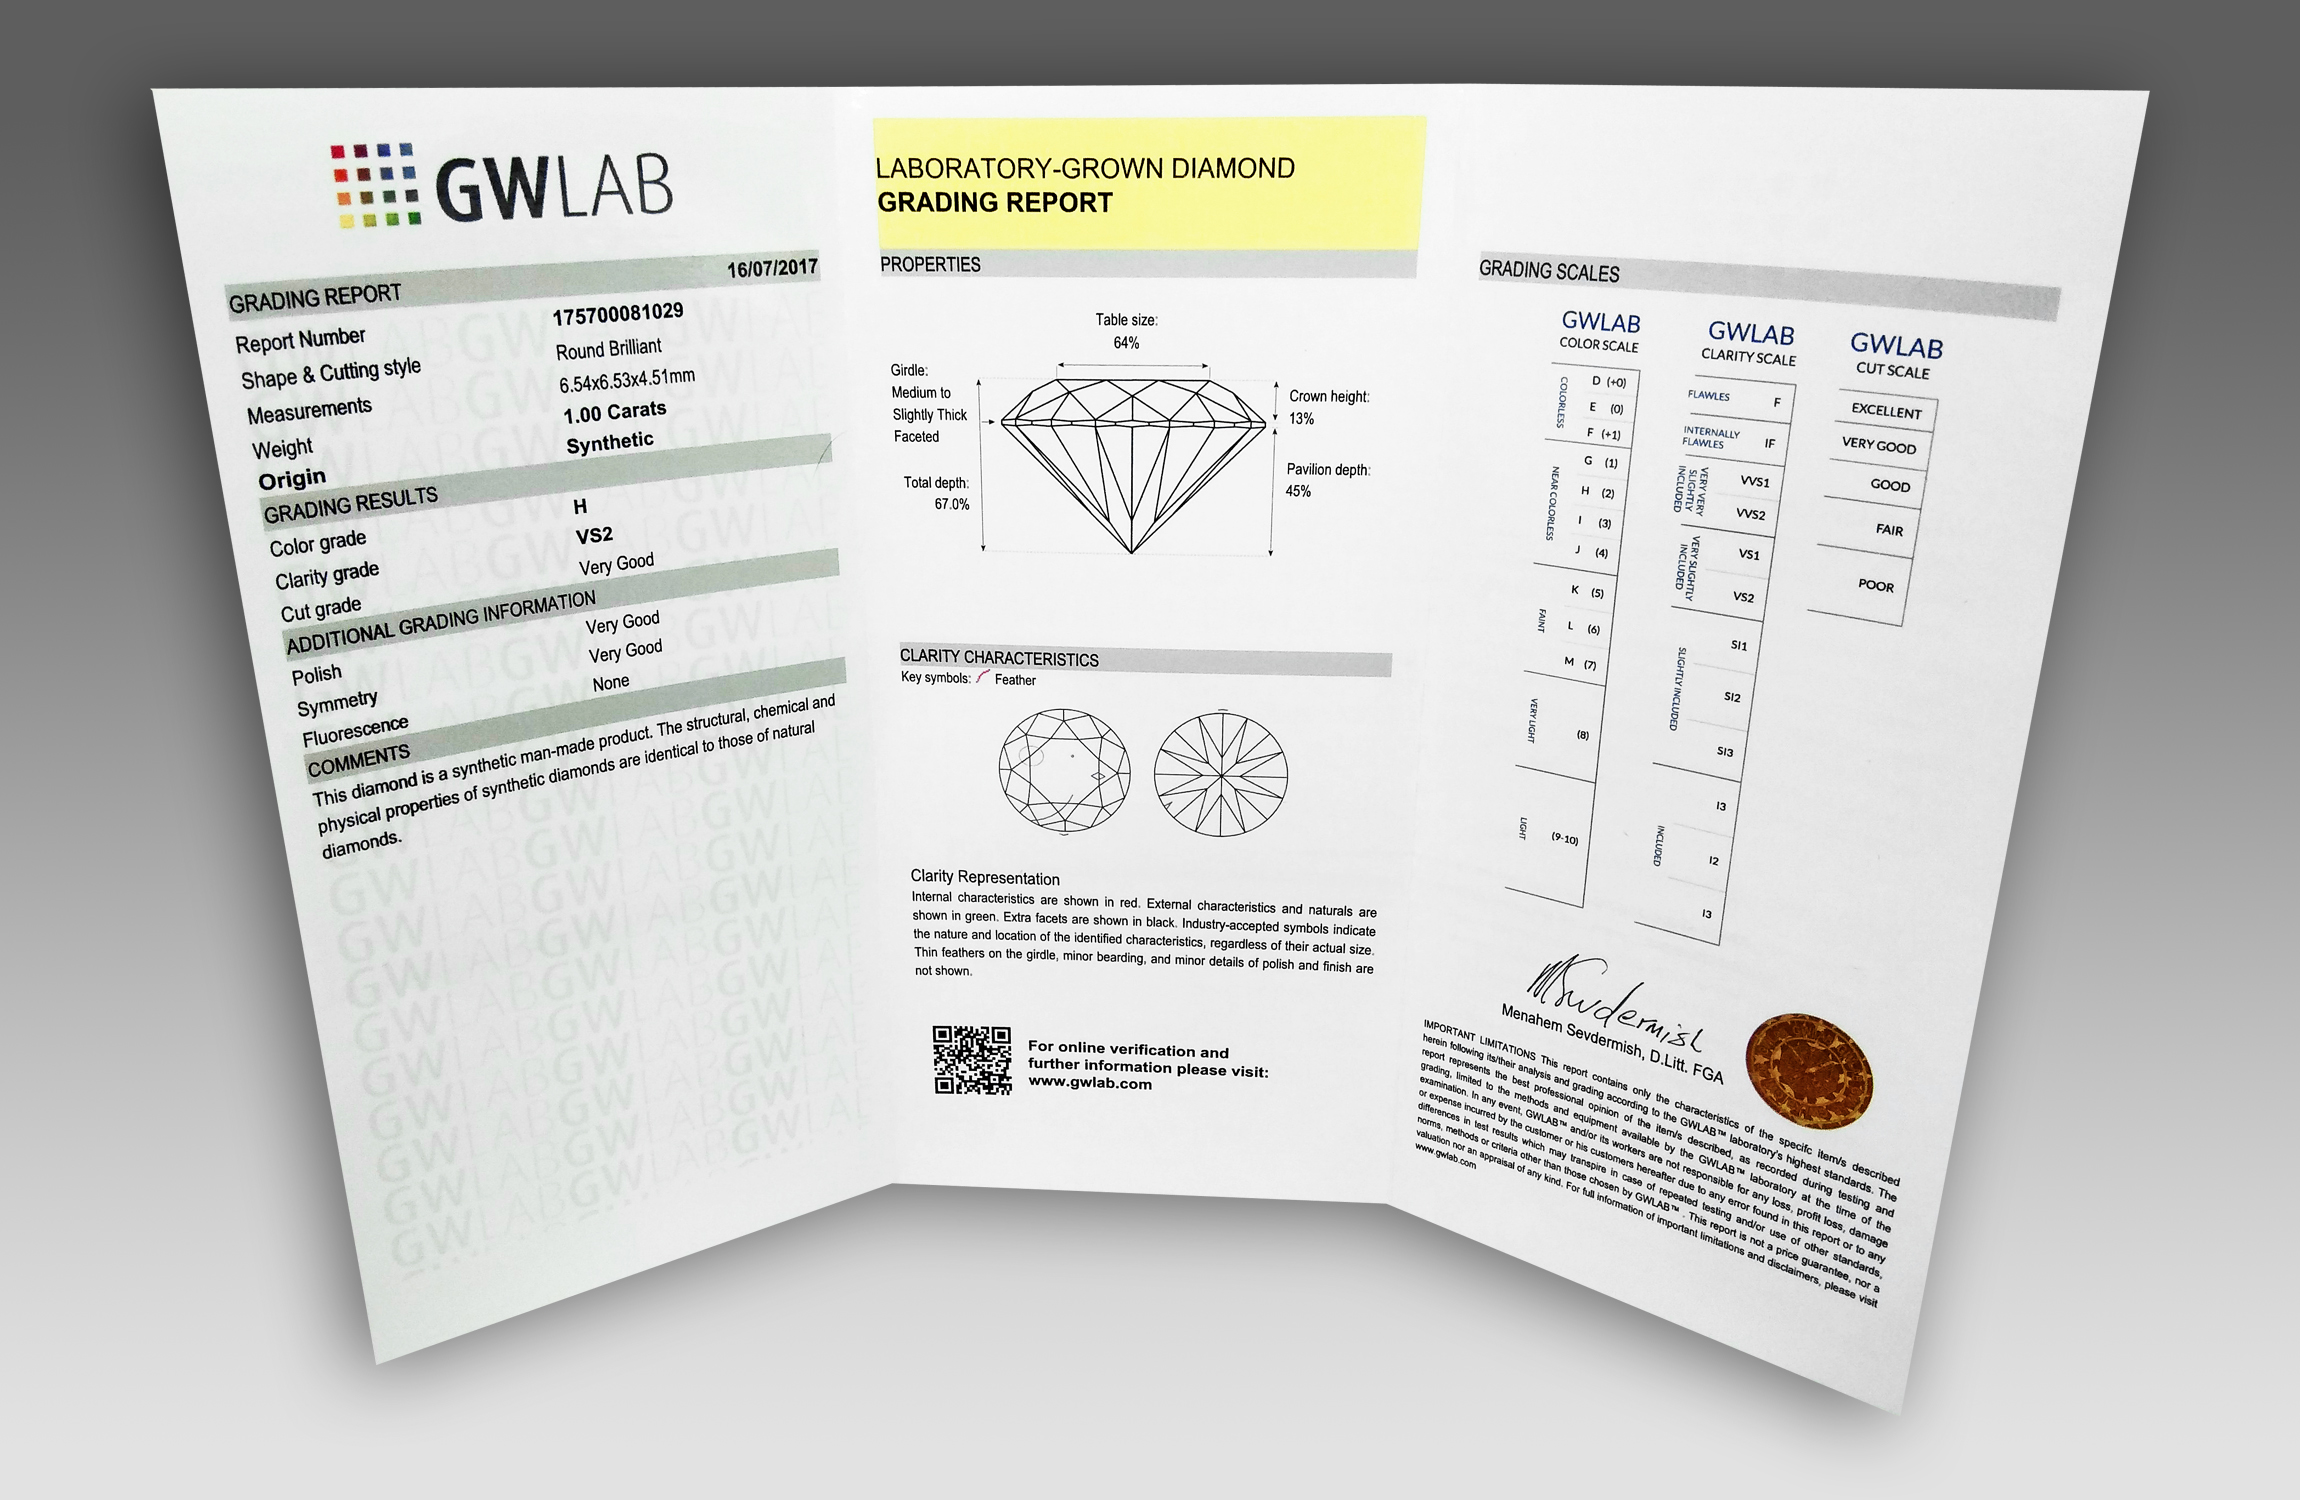 GWLAB Laboratory-Grown Diamond Grading Report - Inner Side